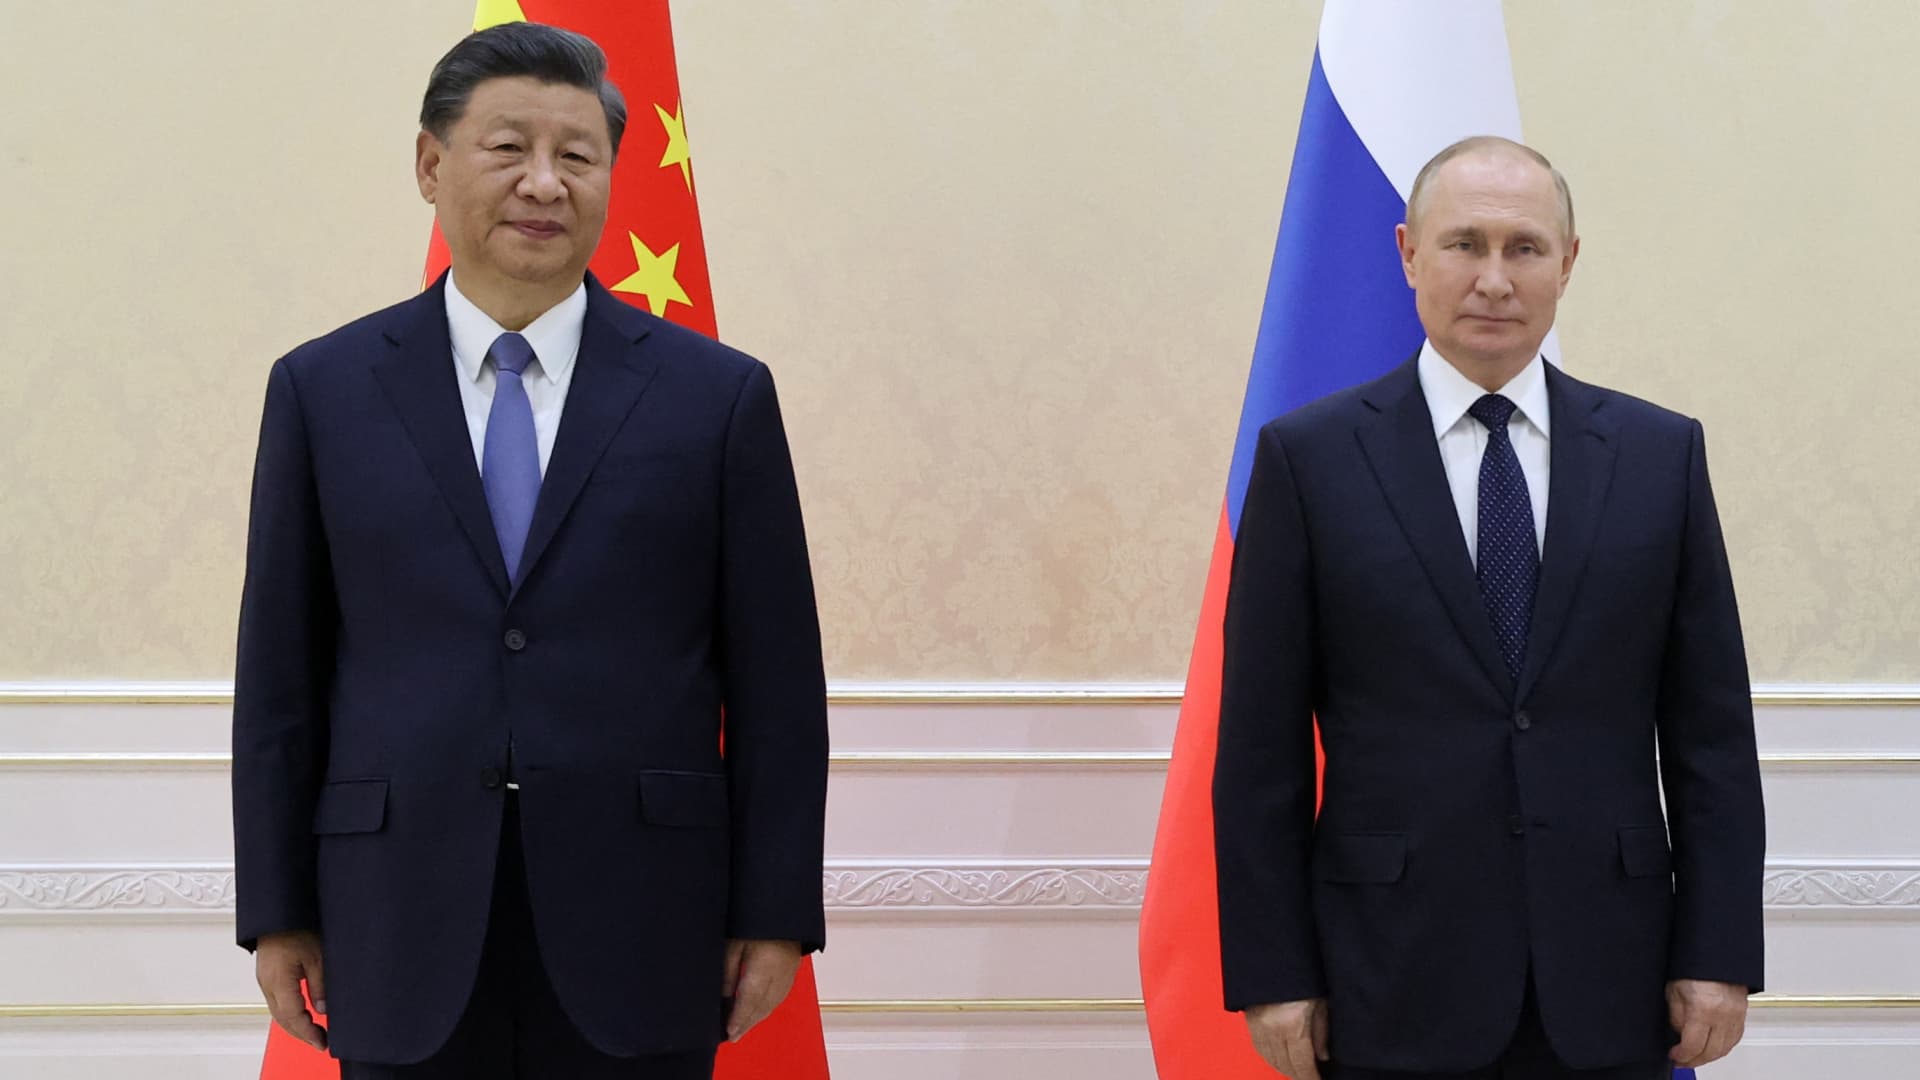 ‘No limits’ relationship between China and Russia has limitations professor says – CNBC